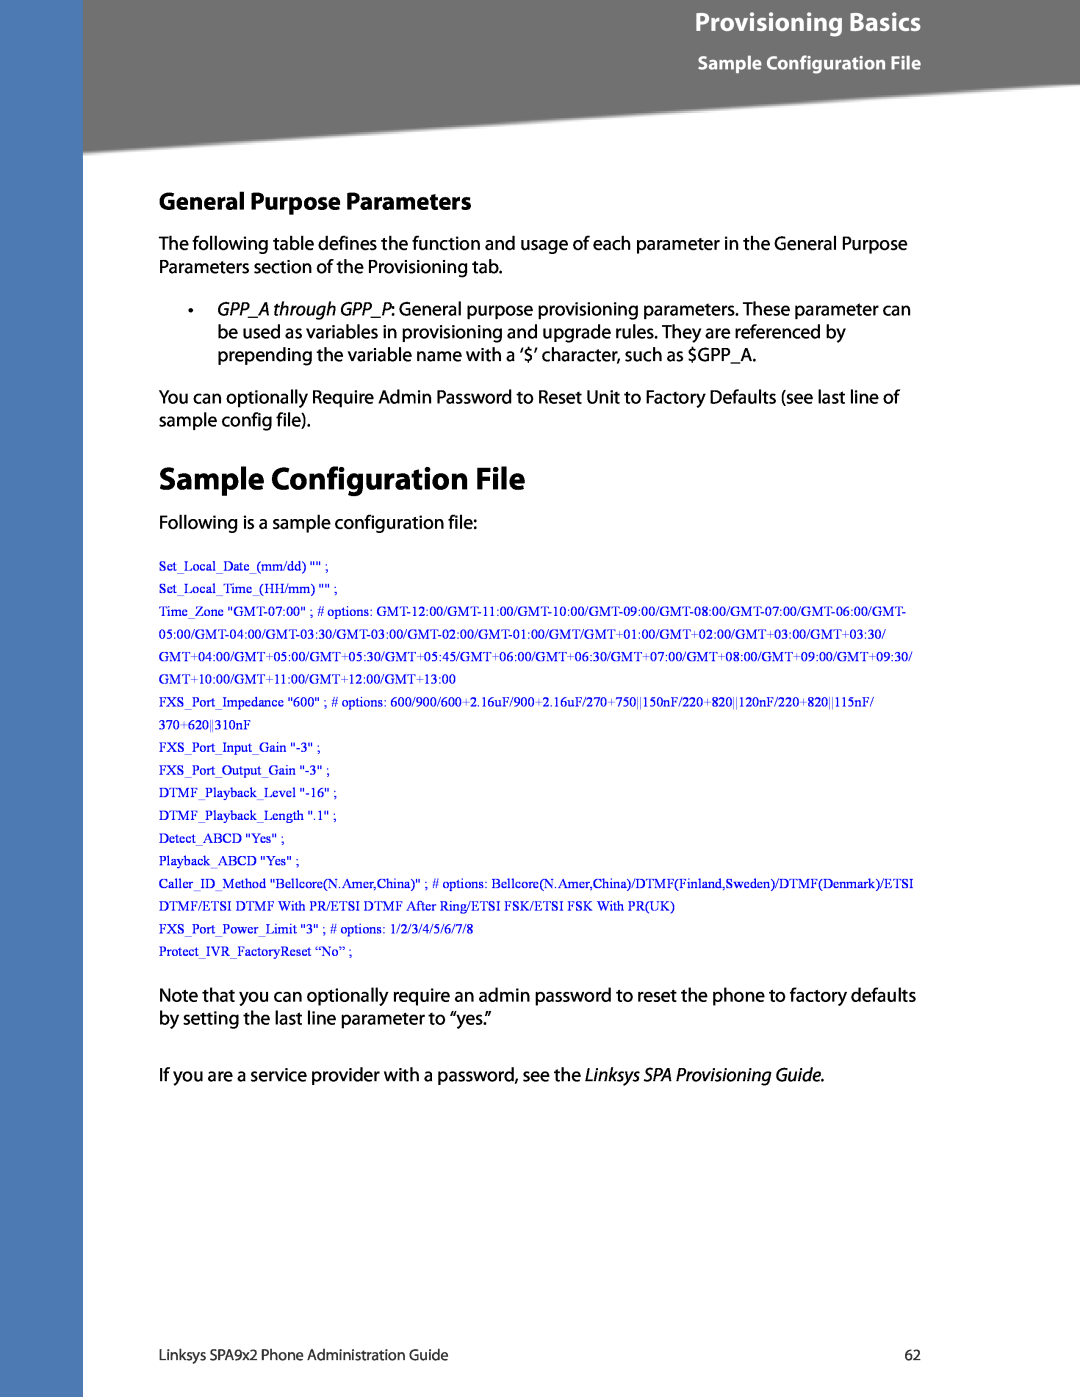 Linksys SPA942, SPA962, SPA932, SPA922 manual Sample Configuration File, General Purpose Parameters, Provisioning Basics 